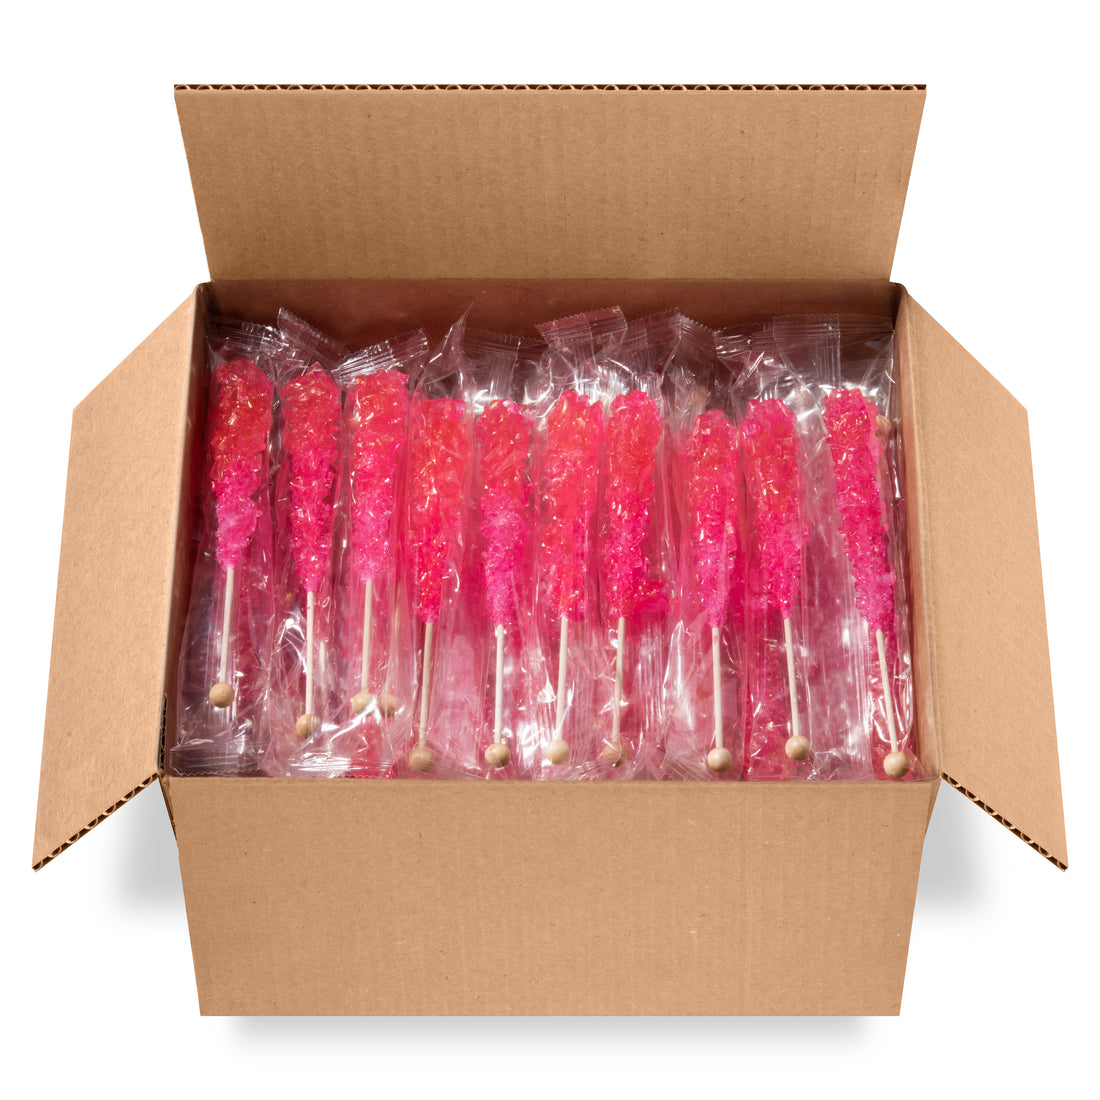 Pink Rock Candy Crystal Sticks - Cherry Flavor